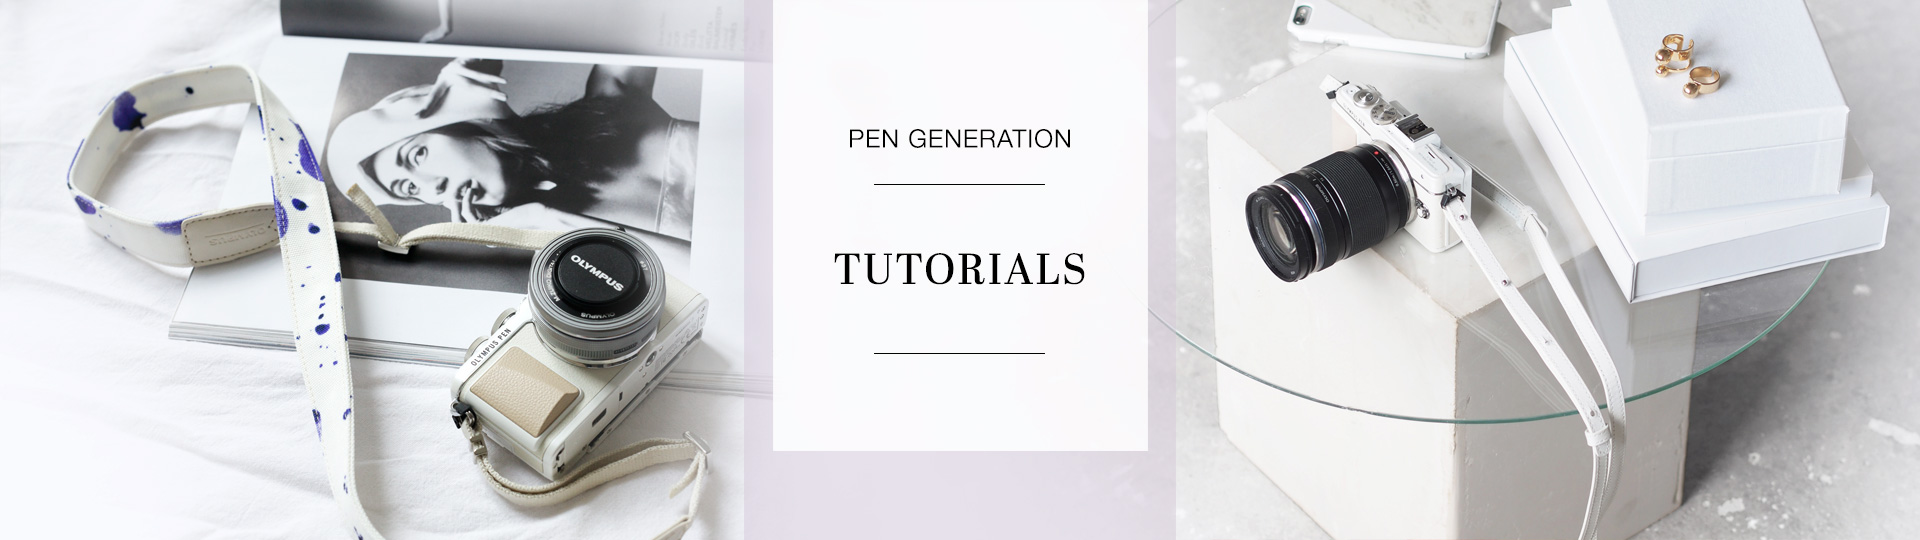 PEN Generation tutorials